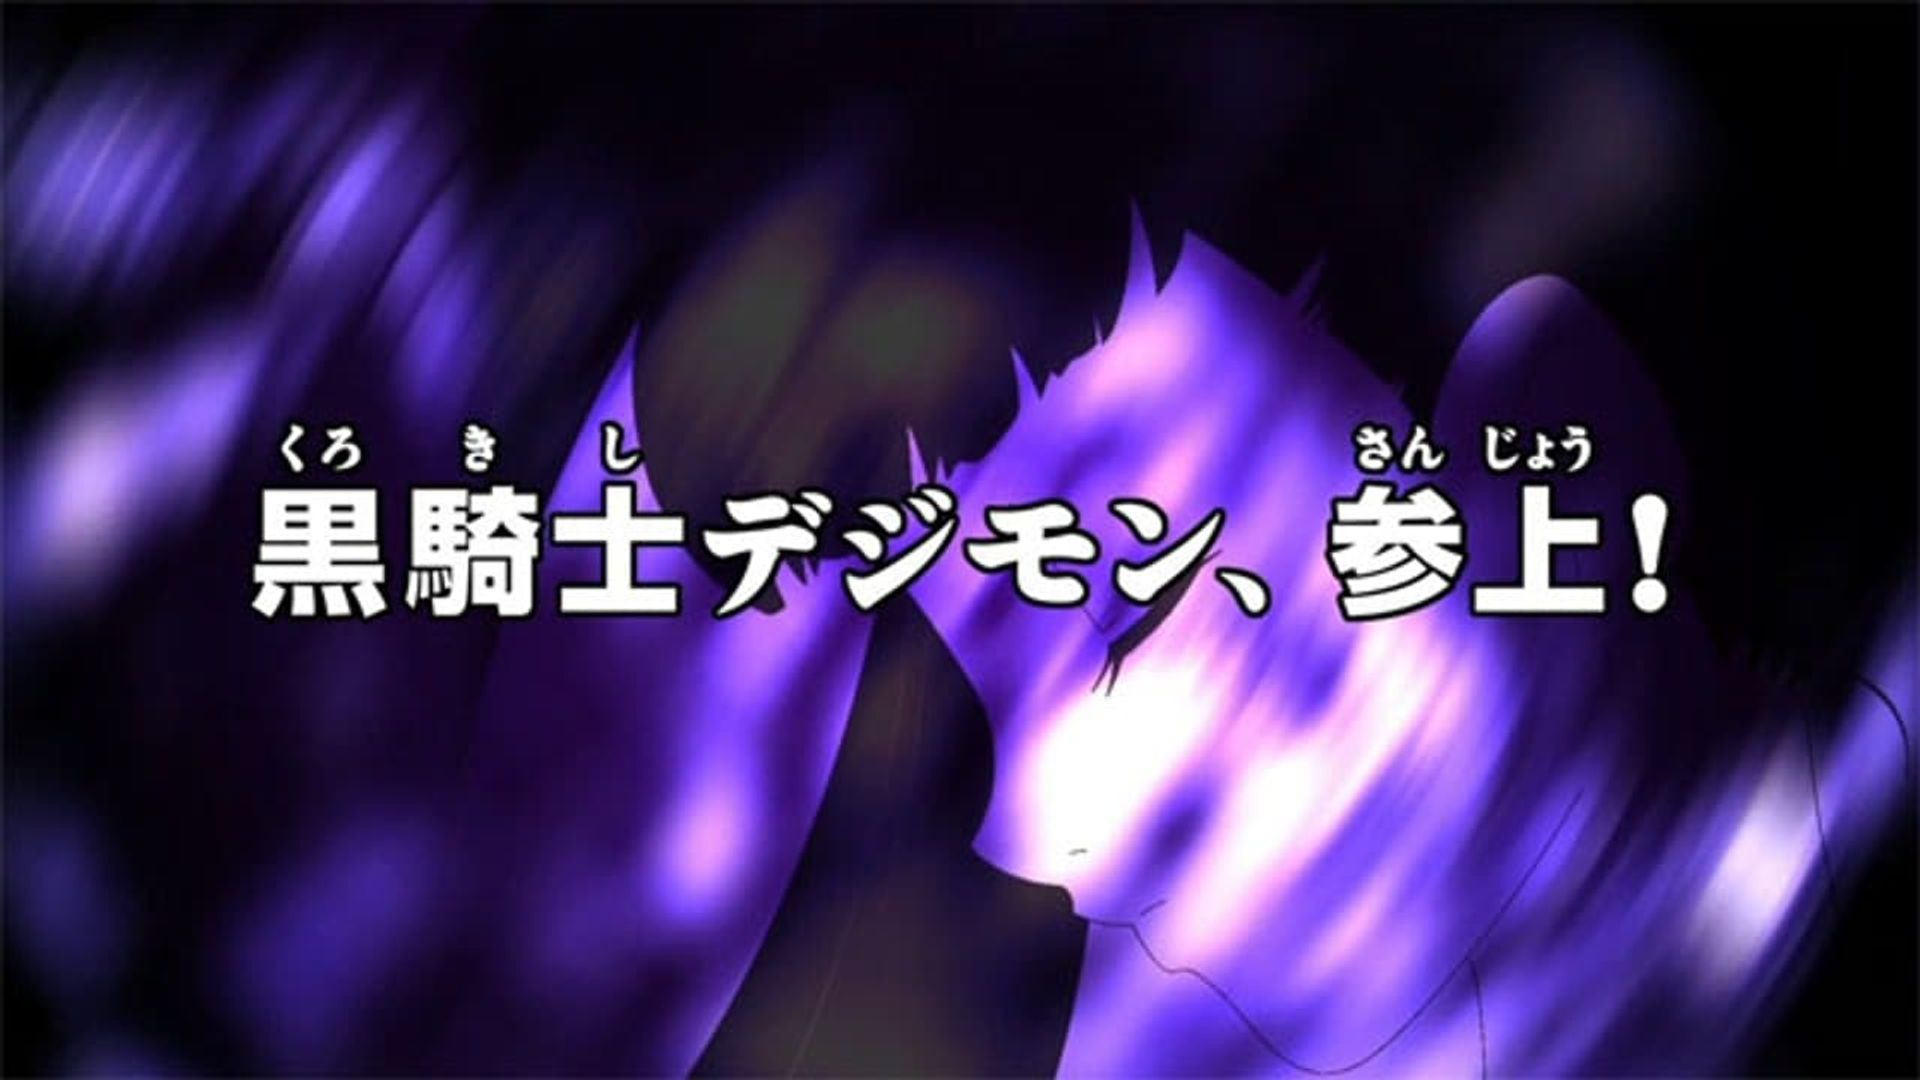 Digimon Xros Wars background